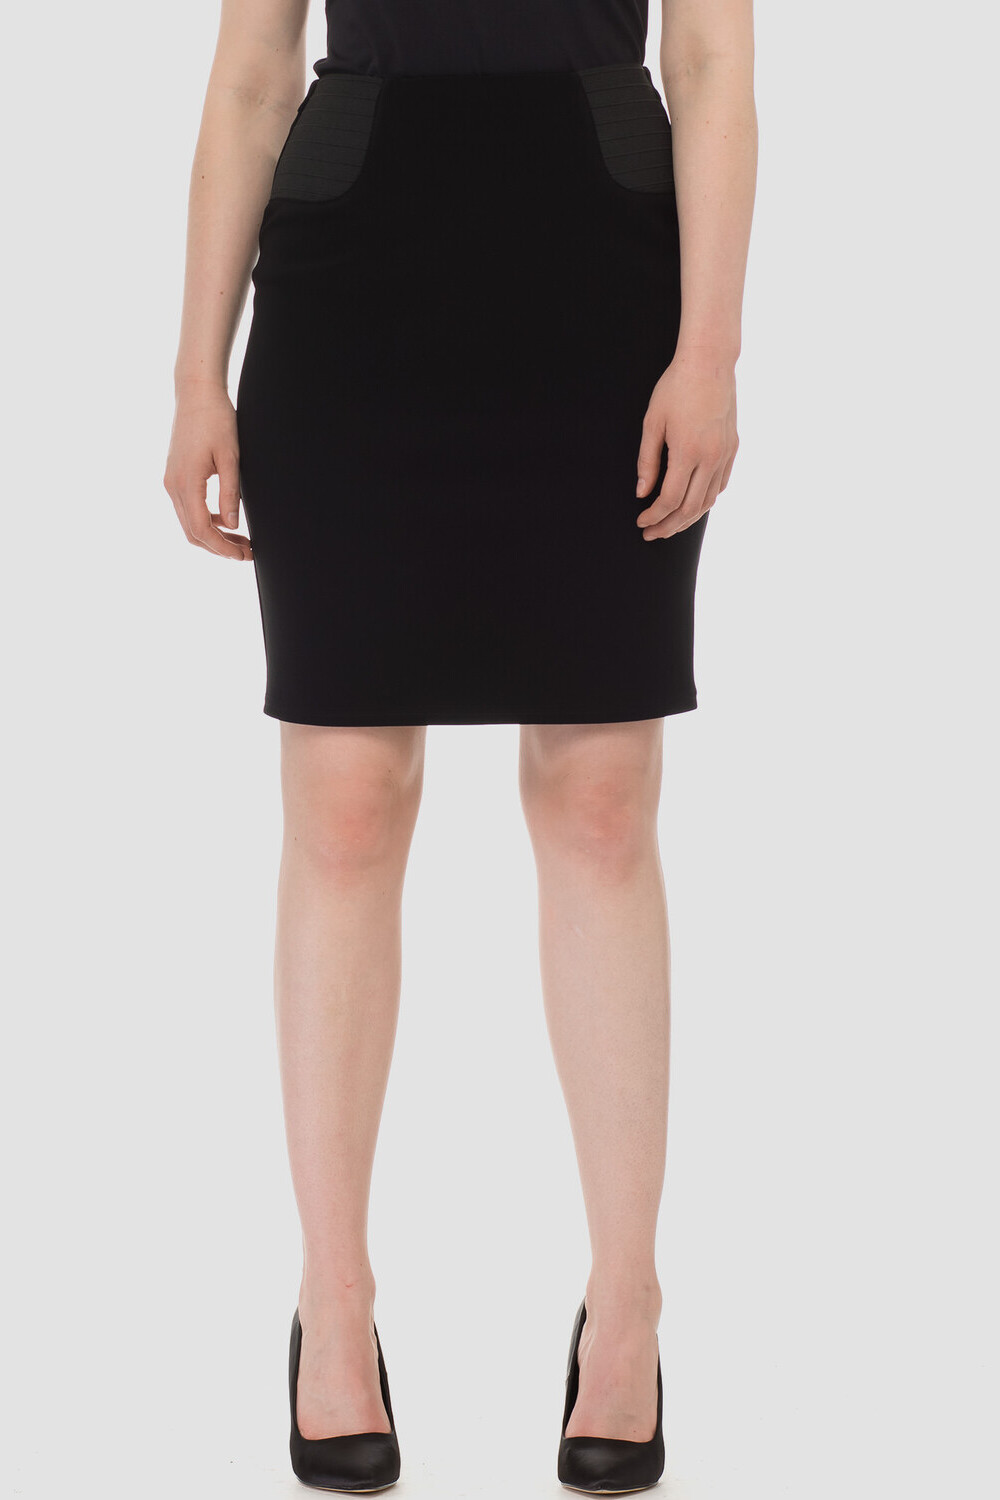 Joseph Ribkoff skirt style 183242. Black